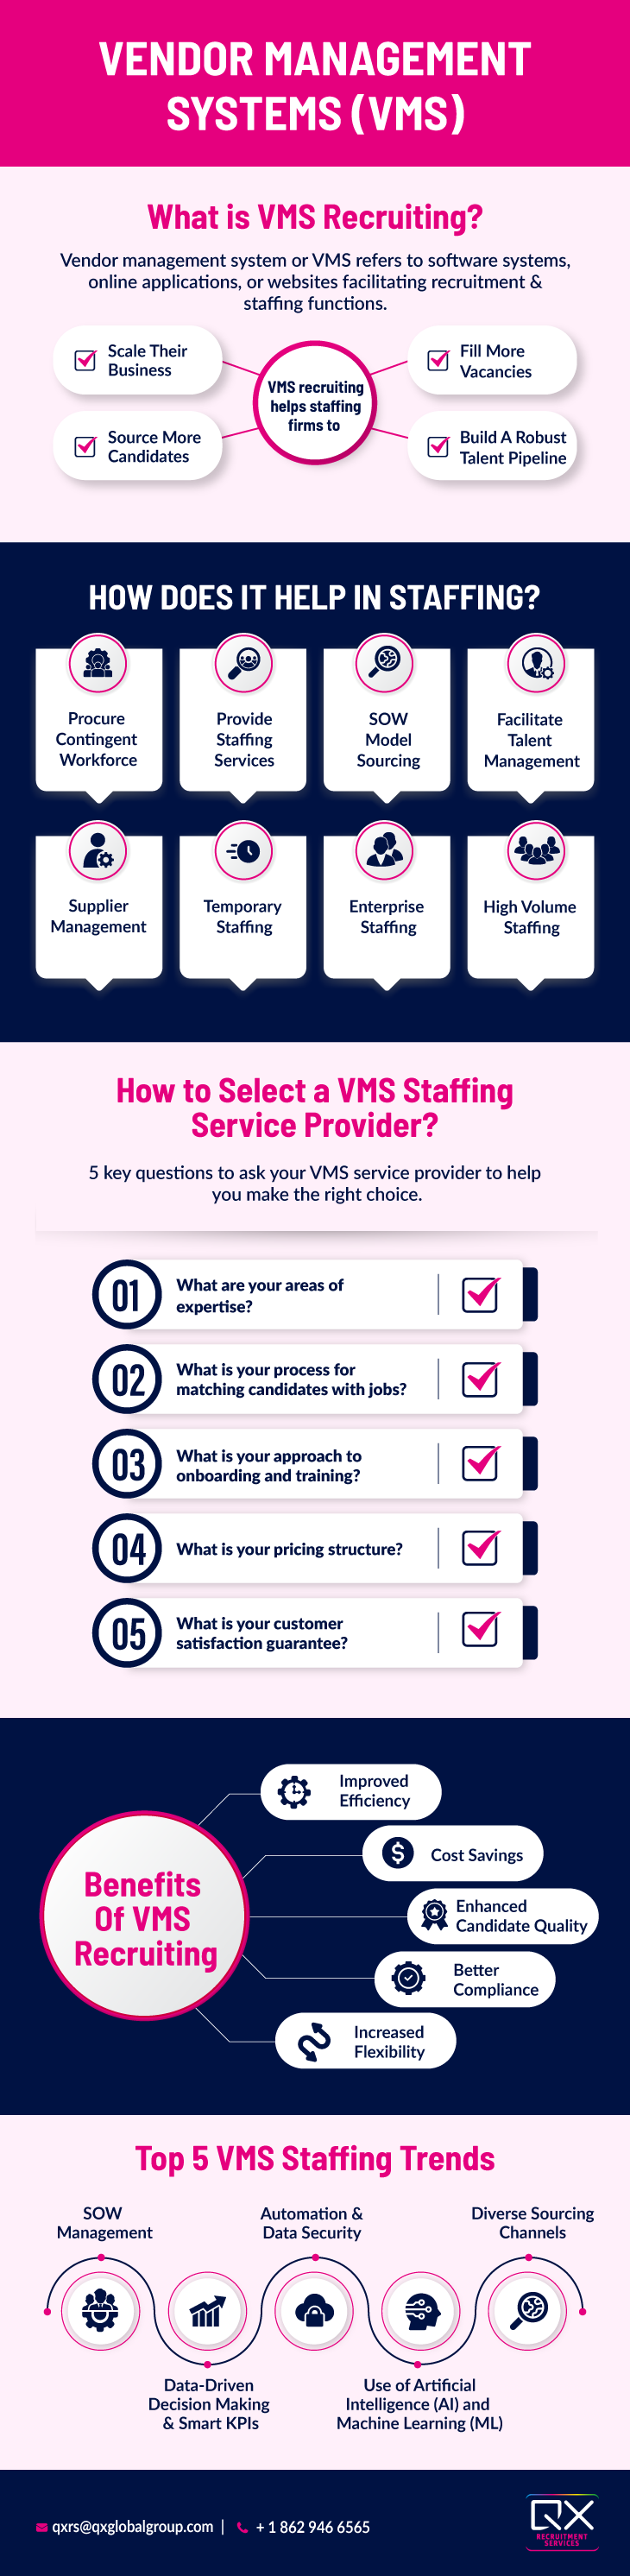 Vendor Management System (VMS) Recruiting